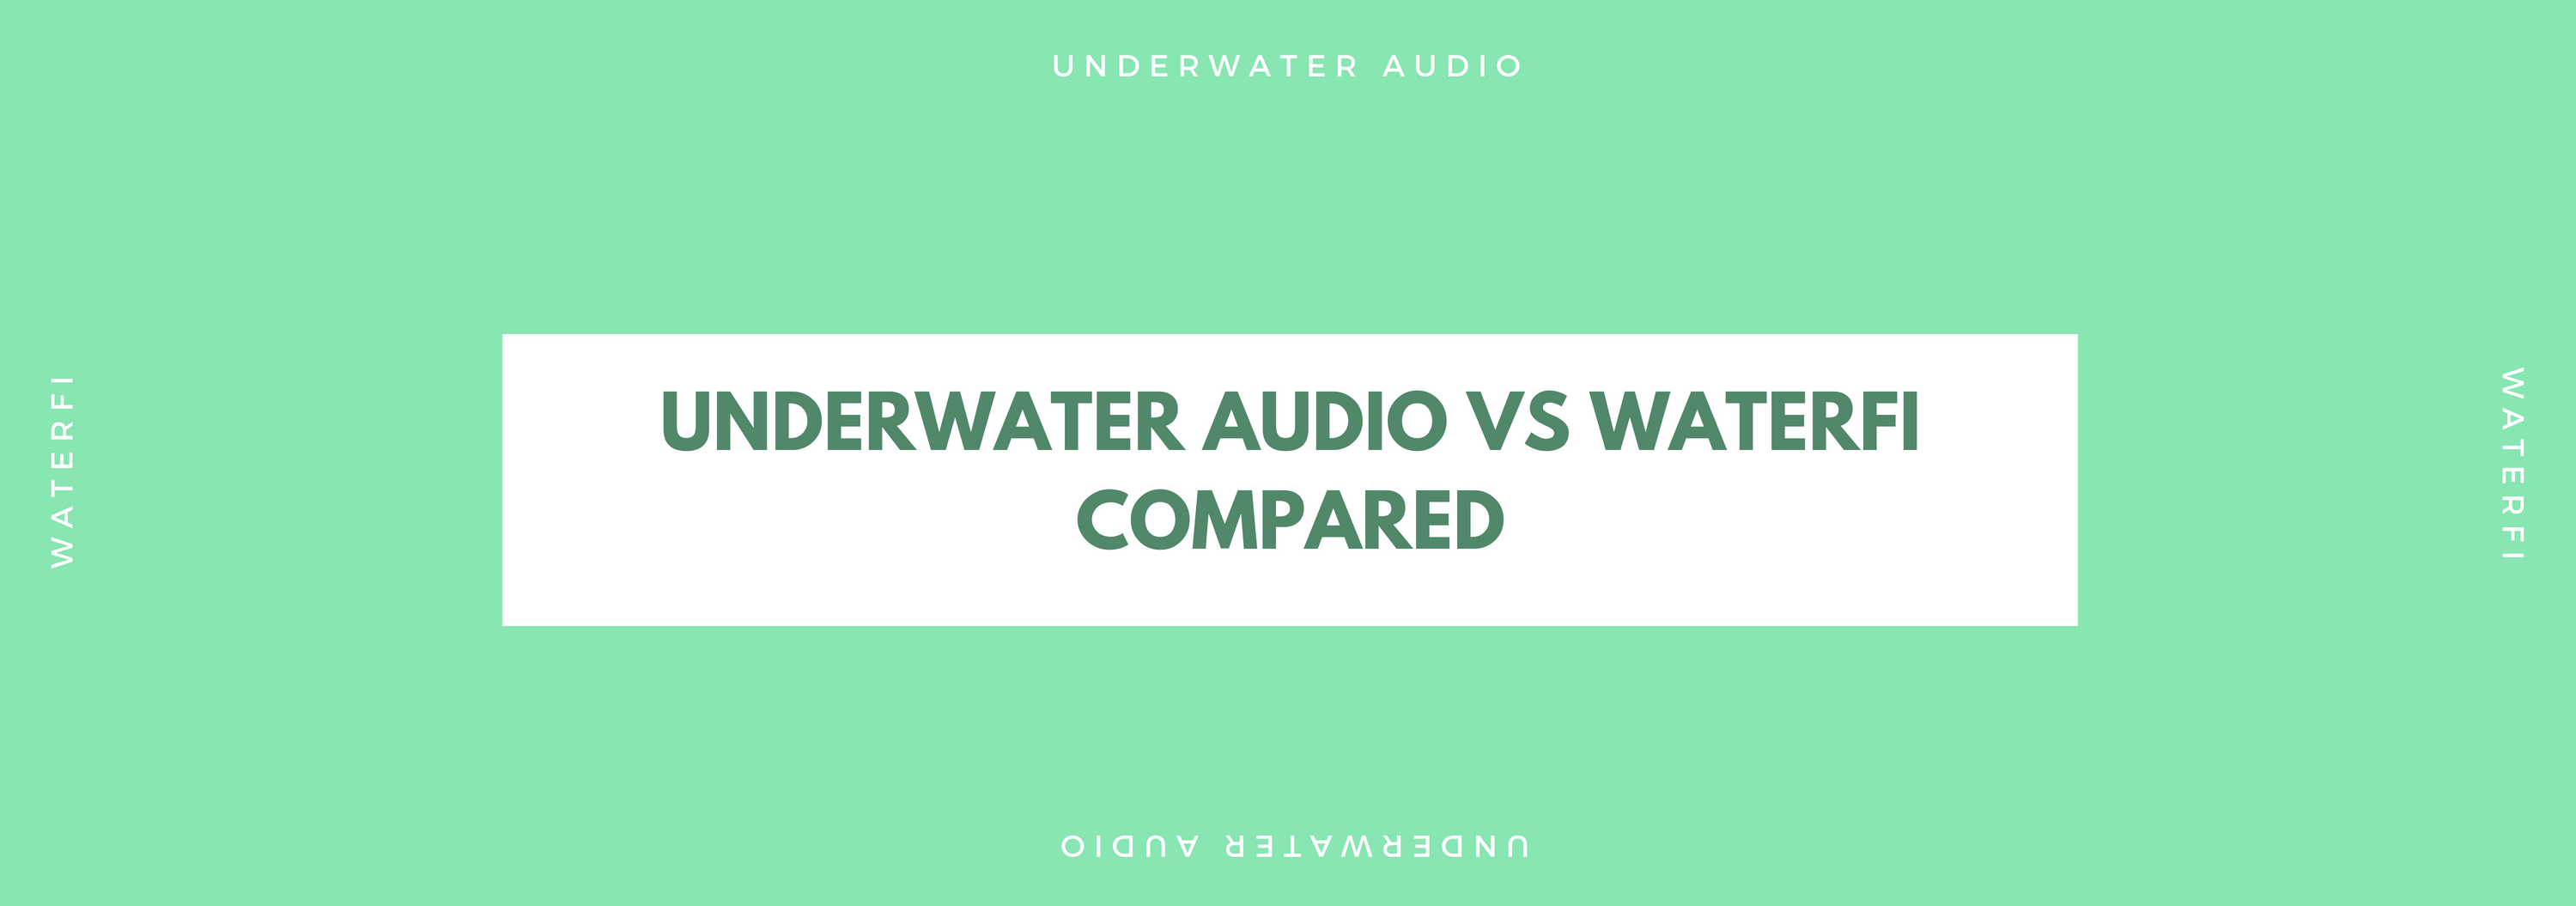 Underwater Audio vs Waterfi Compared